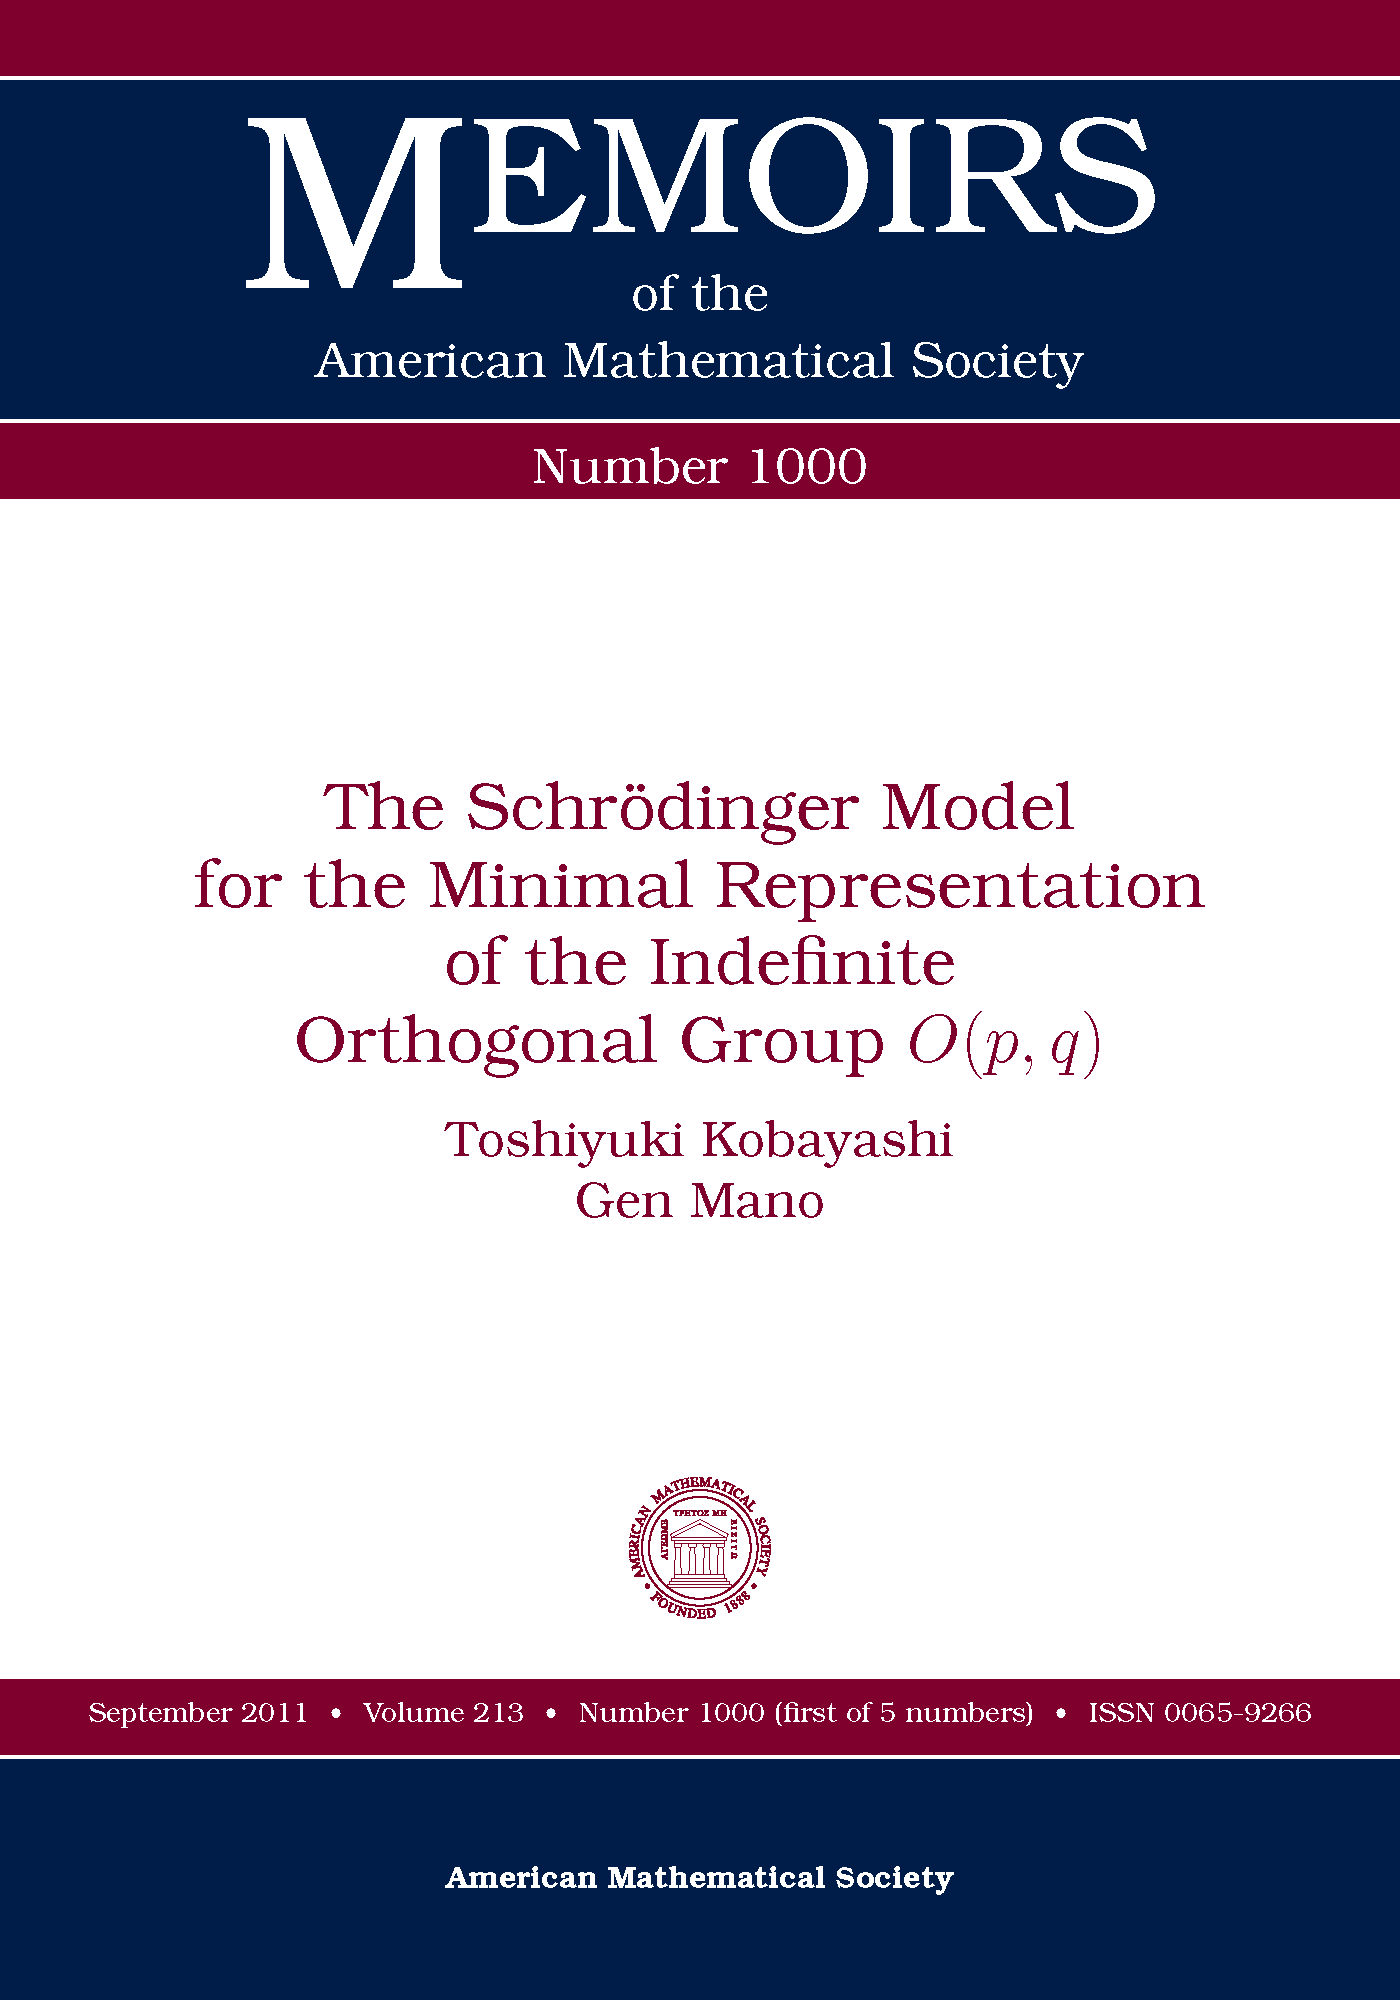 The Schrödinger model for the minimal representation of the indefinite orthogonal group